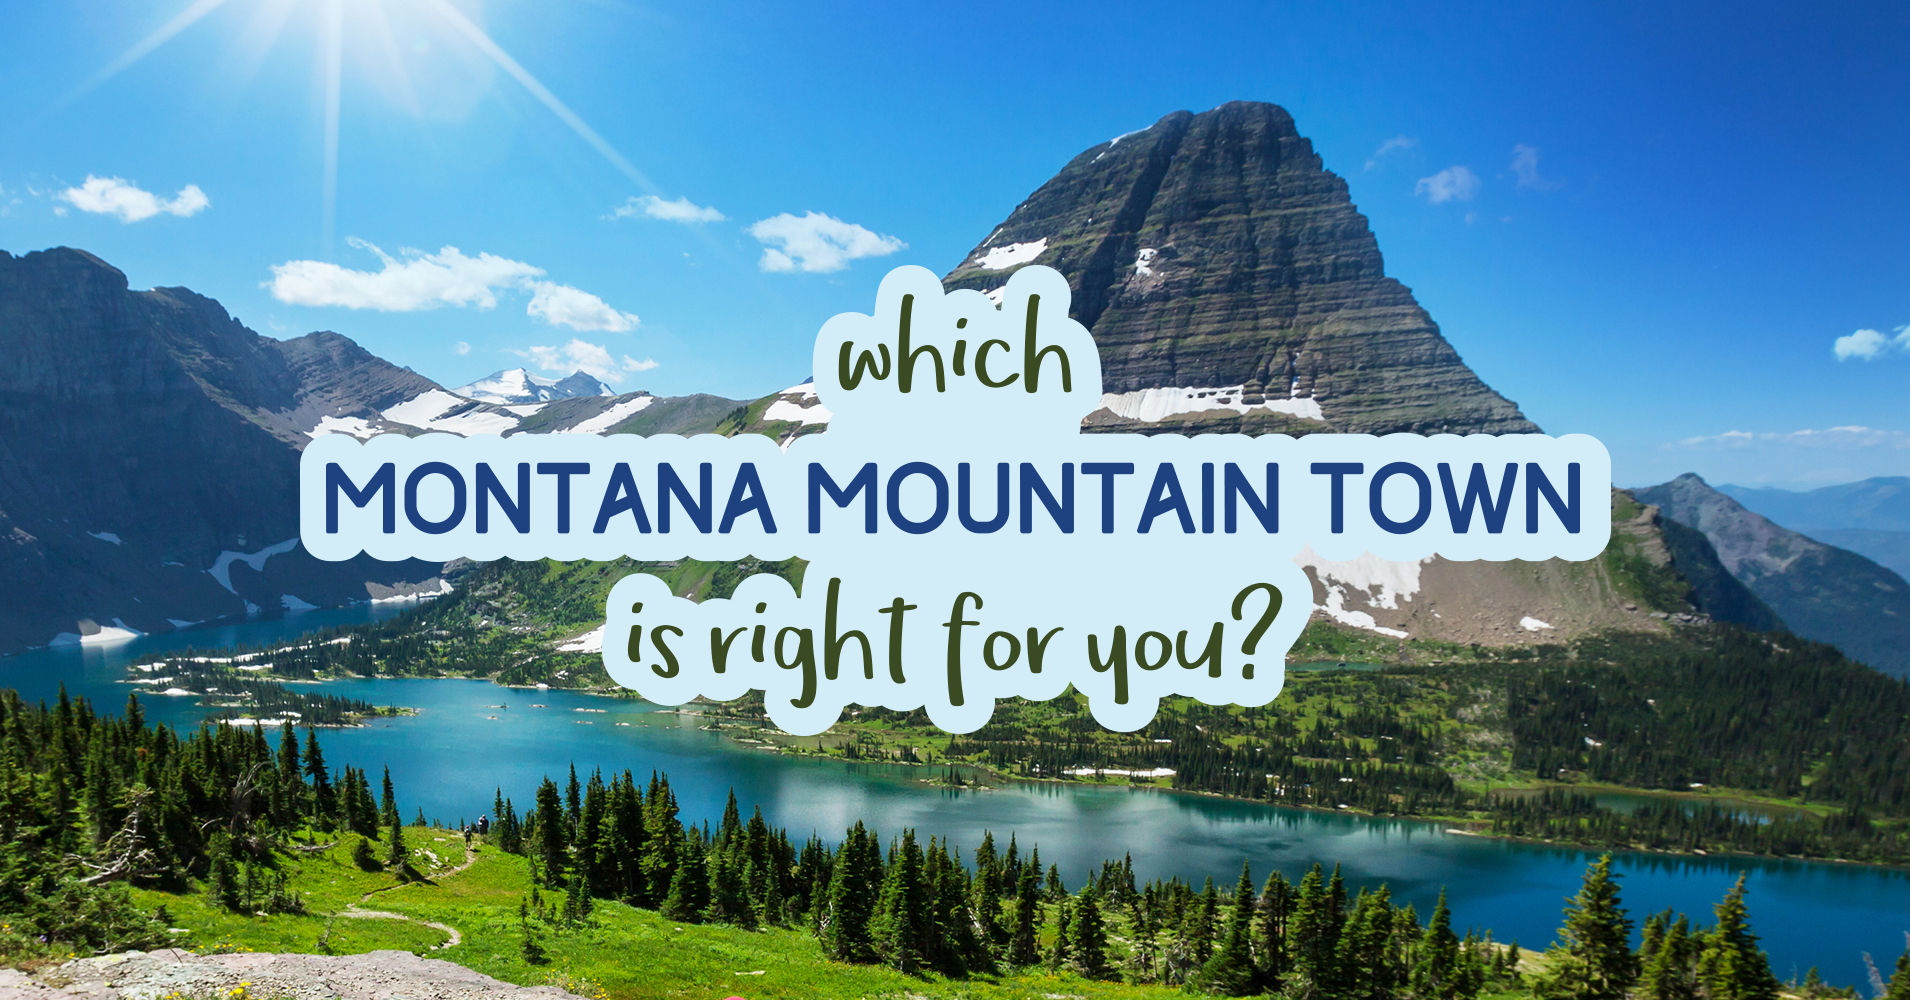 Distinctly Montana